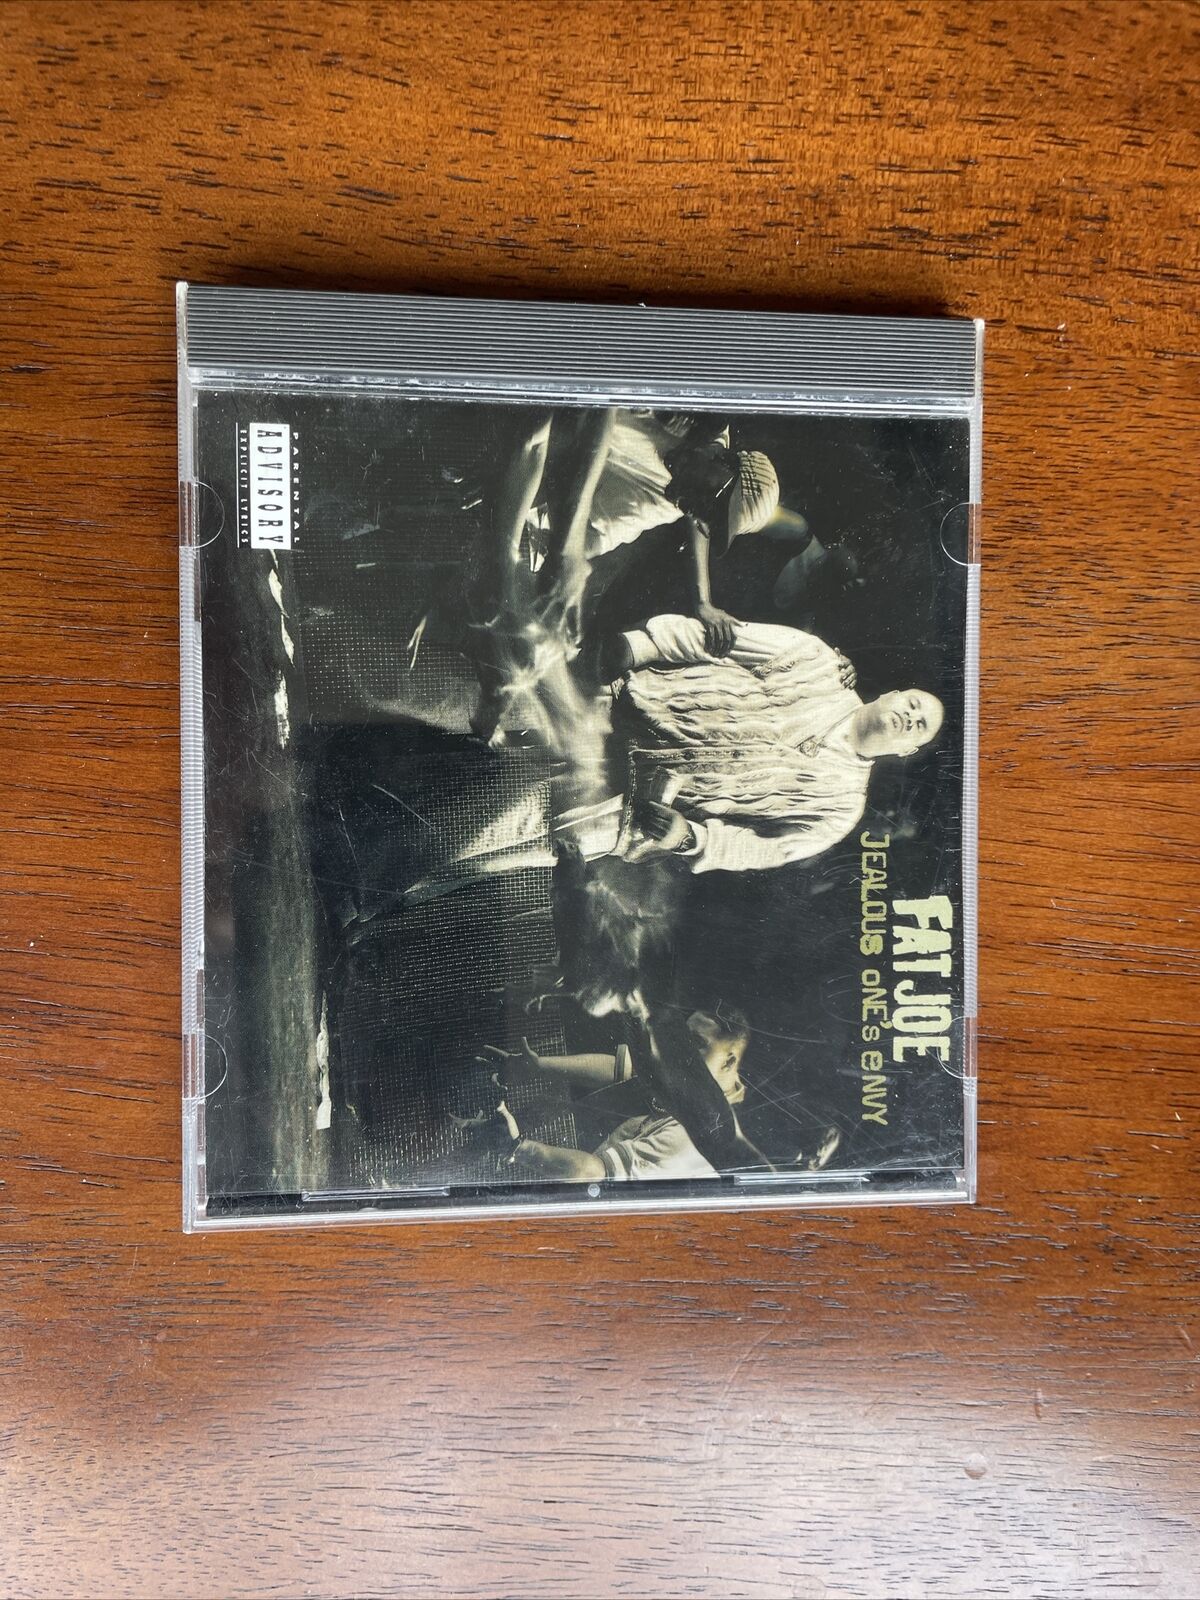 Fat Joe - Jealous One\'s Envy (Original 1995 CD in Great condition) Hip Hop, Rap